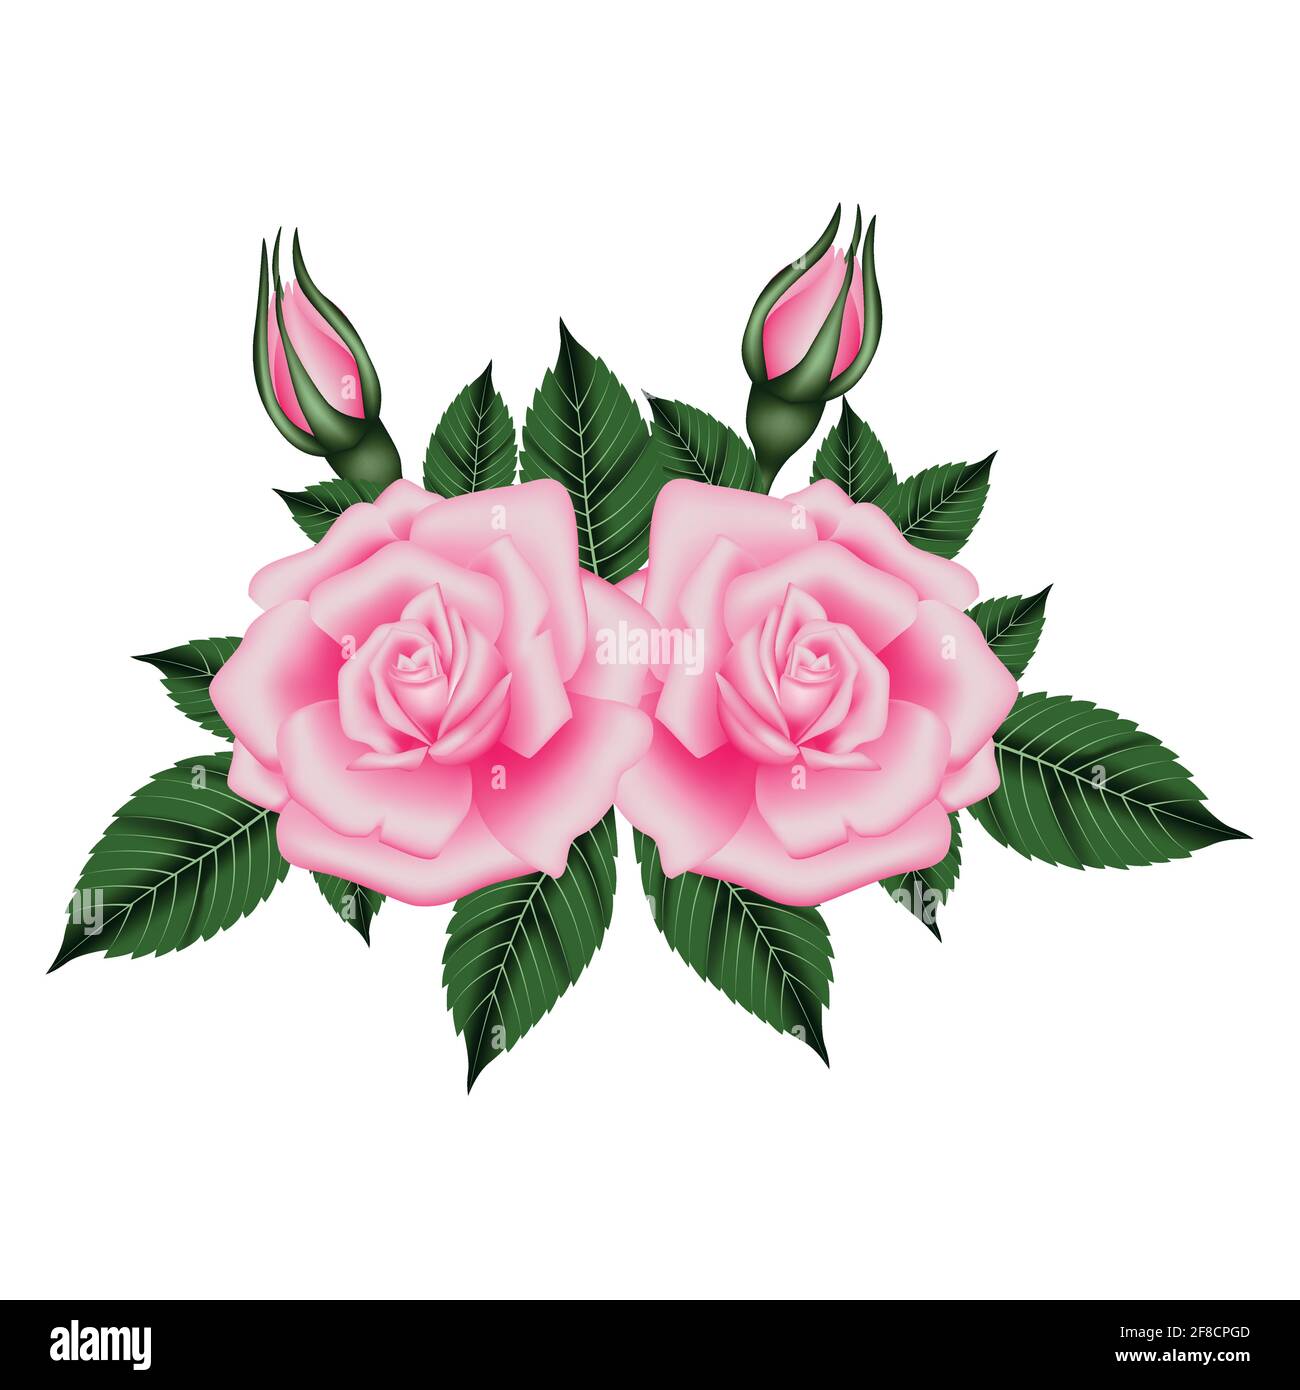 White rose transparent petals wallpaper Imágenes vectoriales de stock -  Alamy